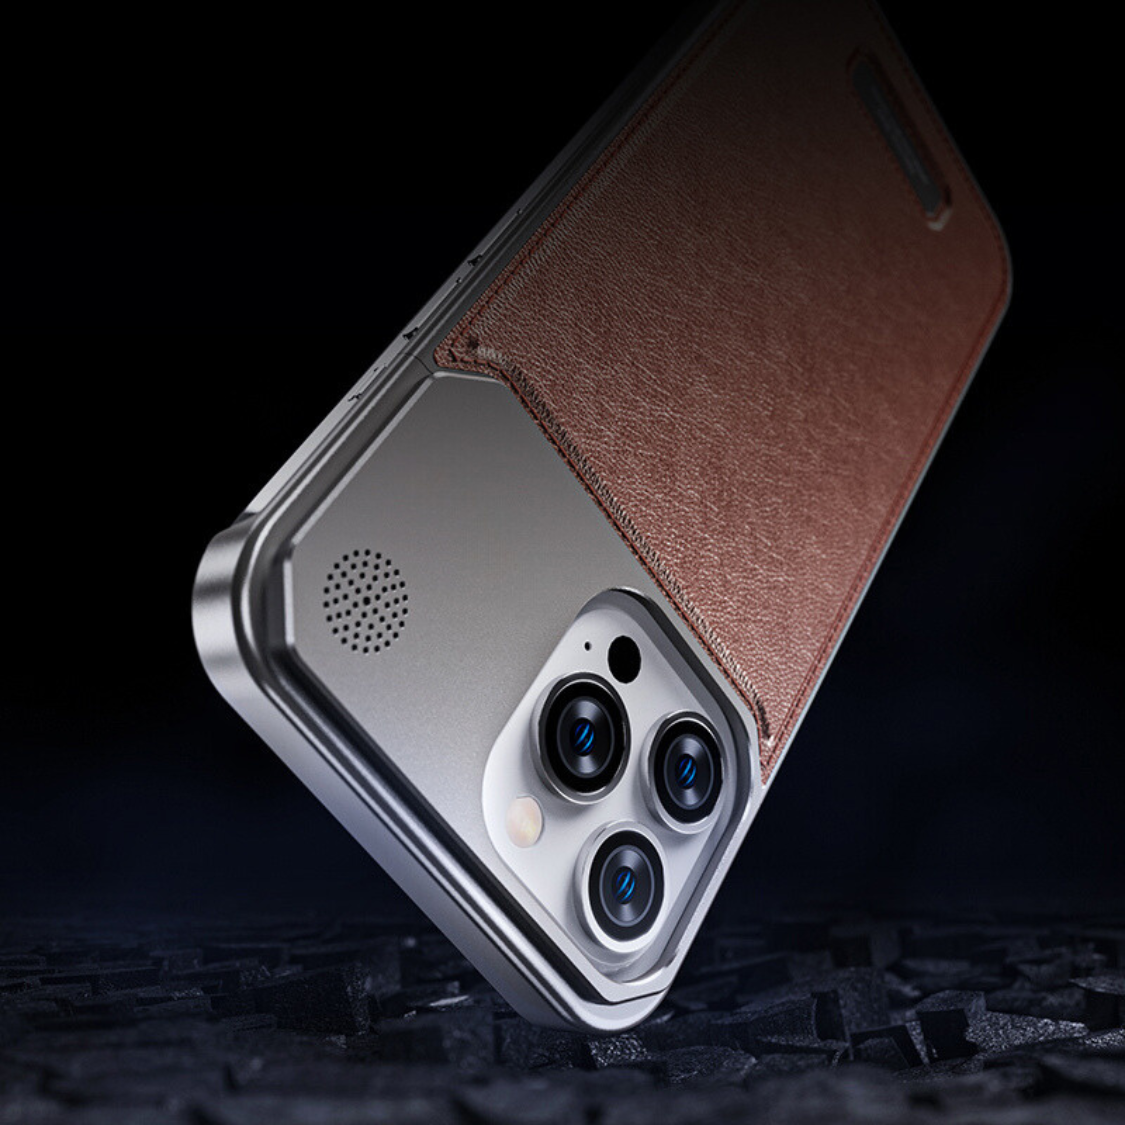 Will Smith - Aluminium & Leather iPhone Case - Black